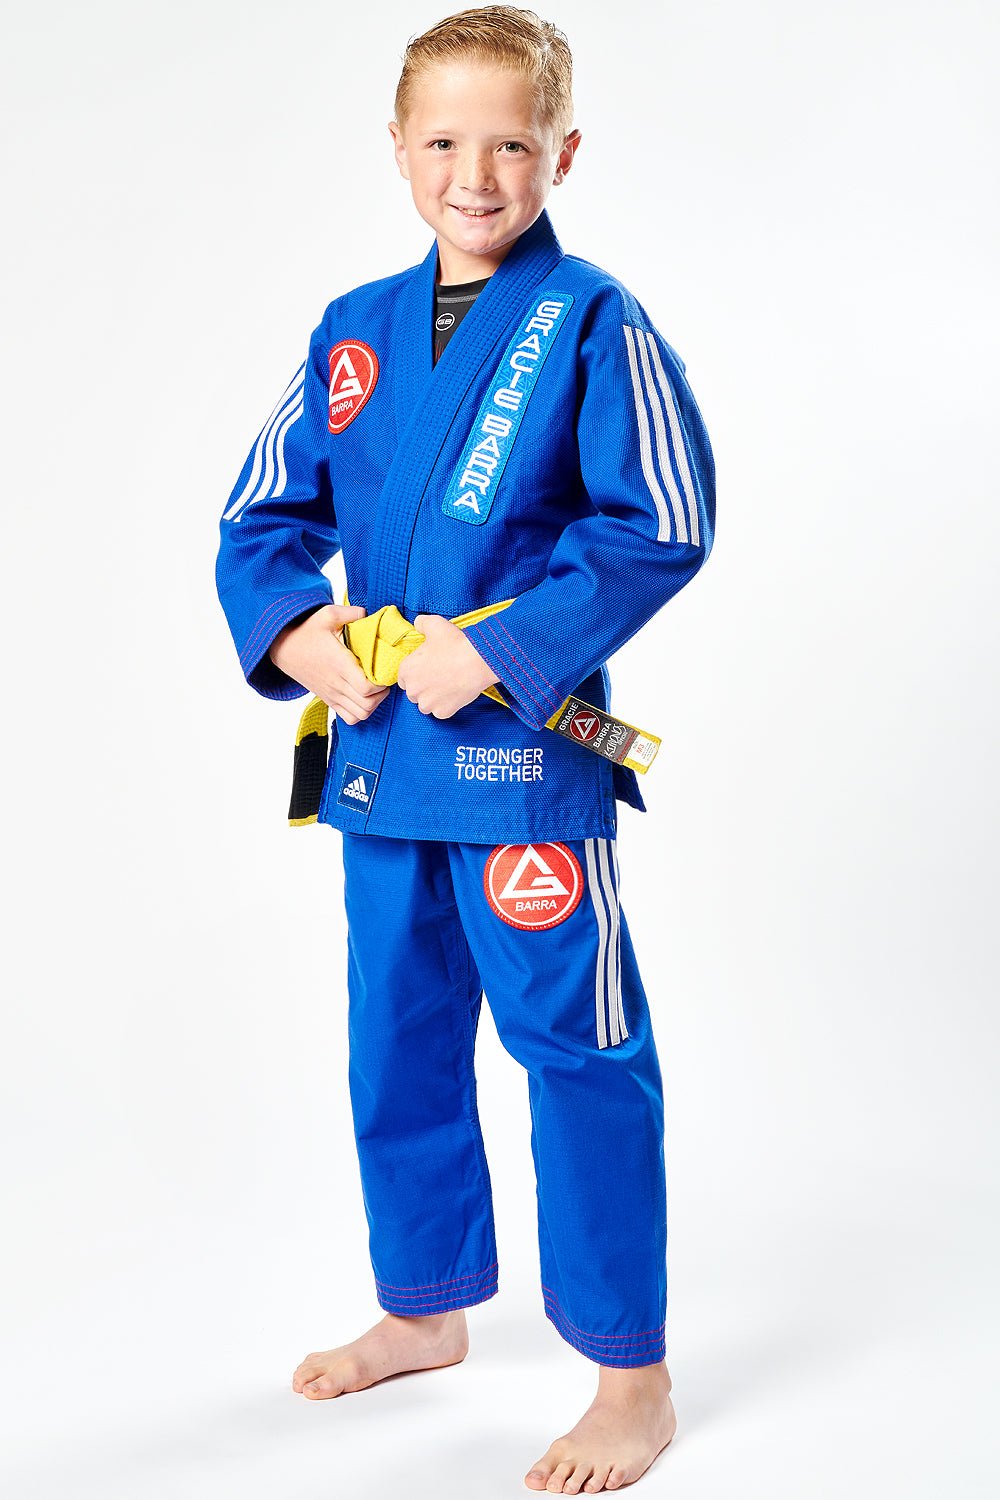 Youth Kimono GB Comp Team by Adidas - Blue